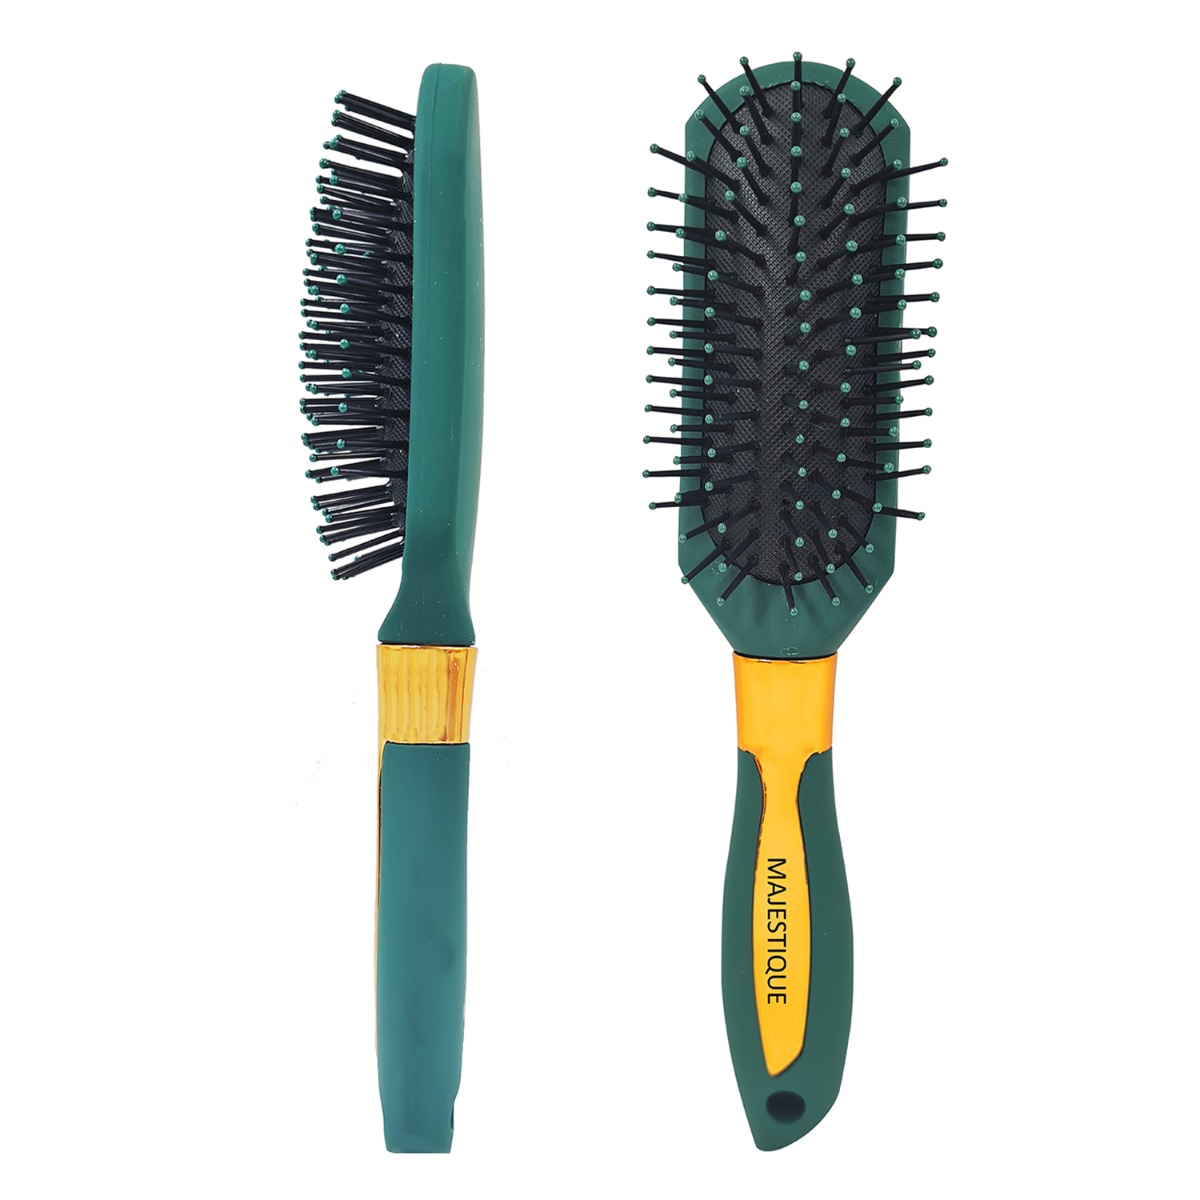 Majestique Styling Brush For Curly Hair 7 Row - Velvet Green, 1Pc